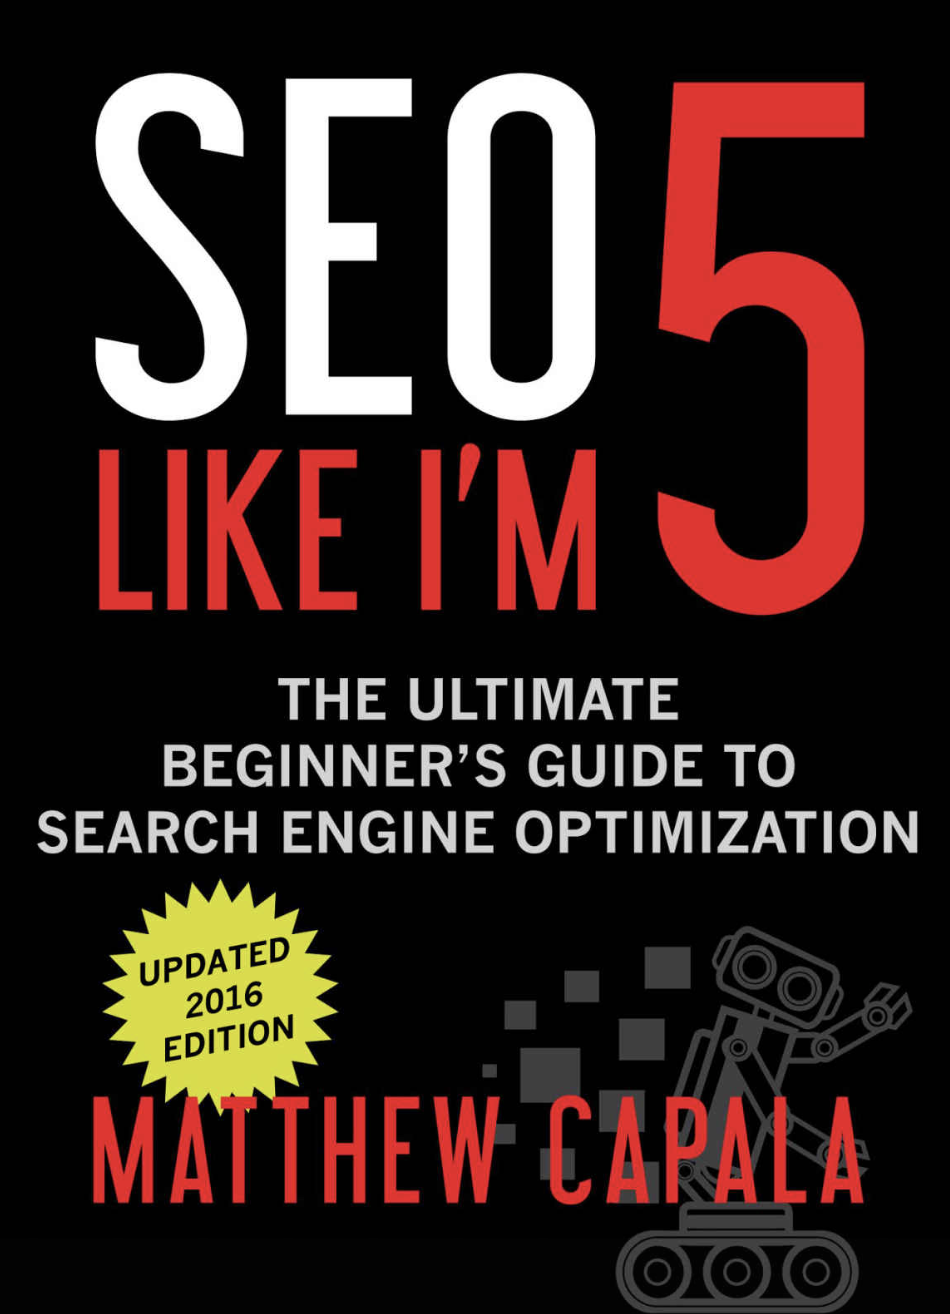 SEO Like I'm 5 Blogging Book for Search Engine Optimization